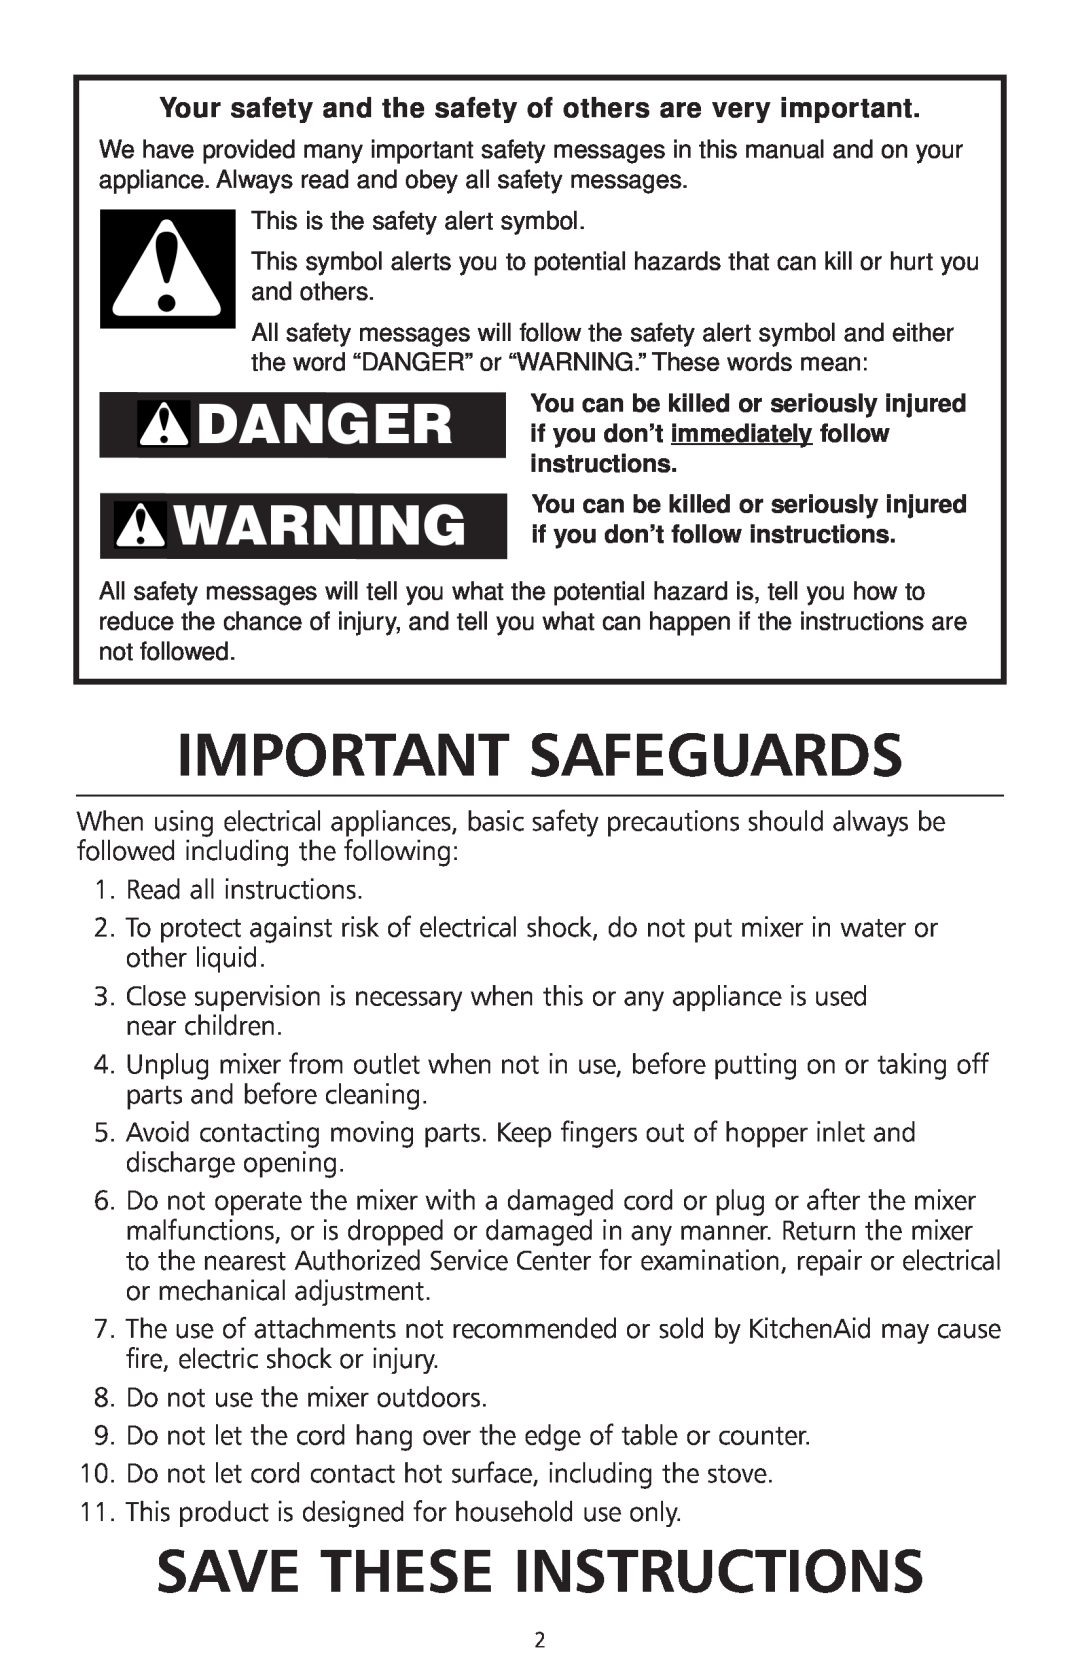 KitchenAid Model KRAV manual Important Safeguards, Save These Instructions 